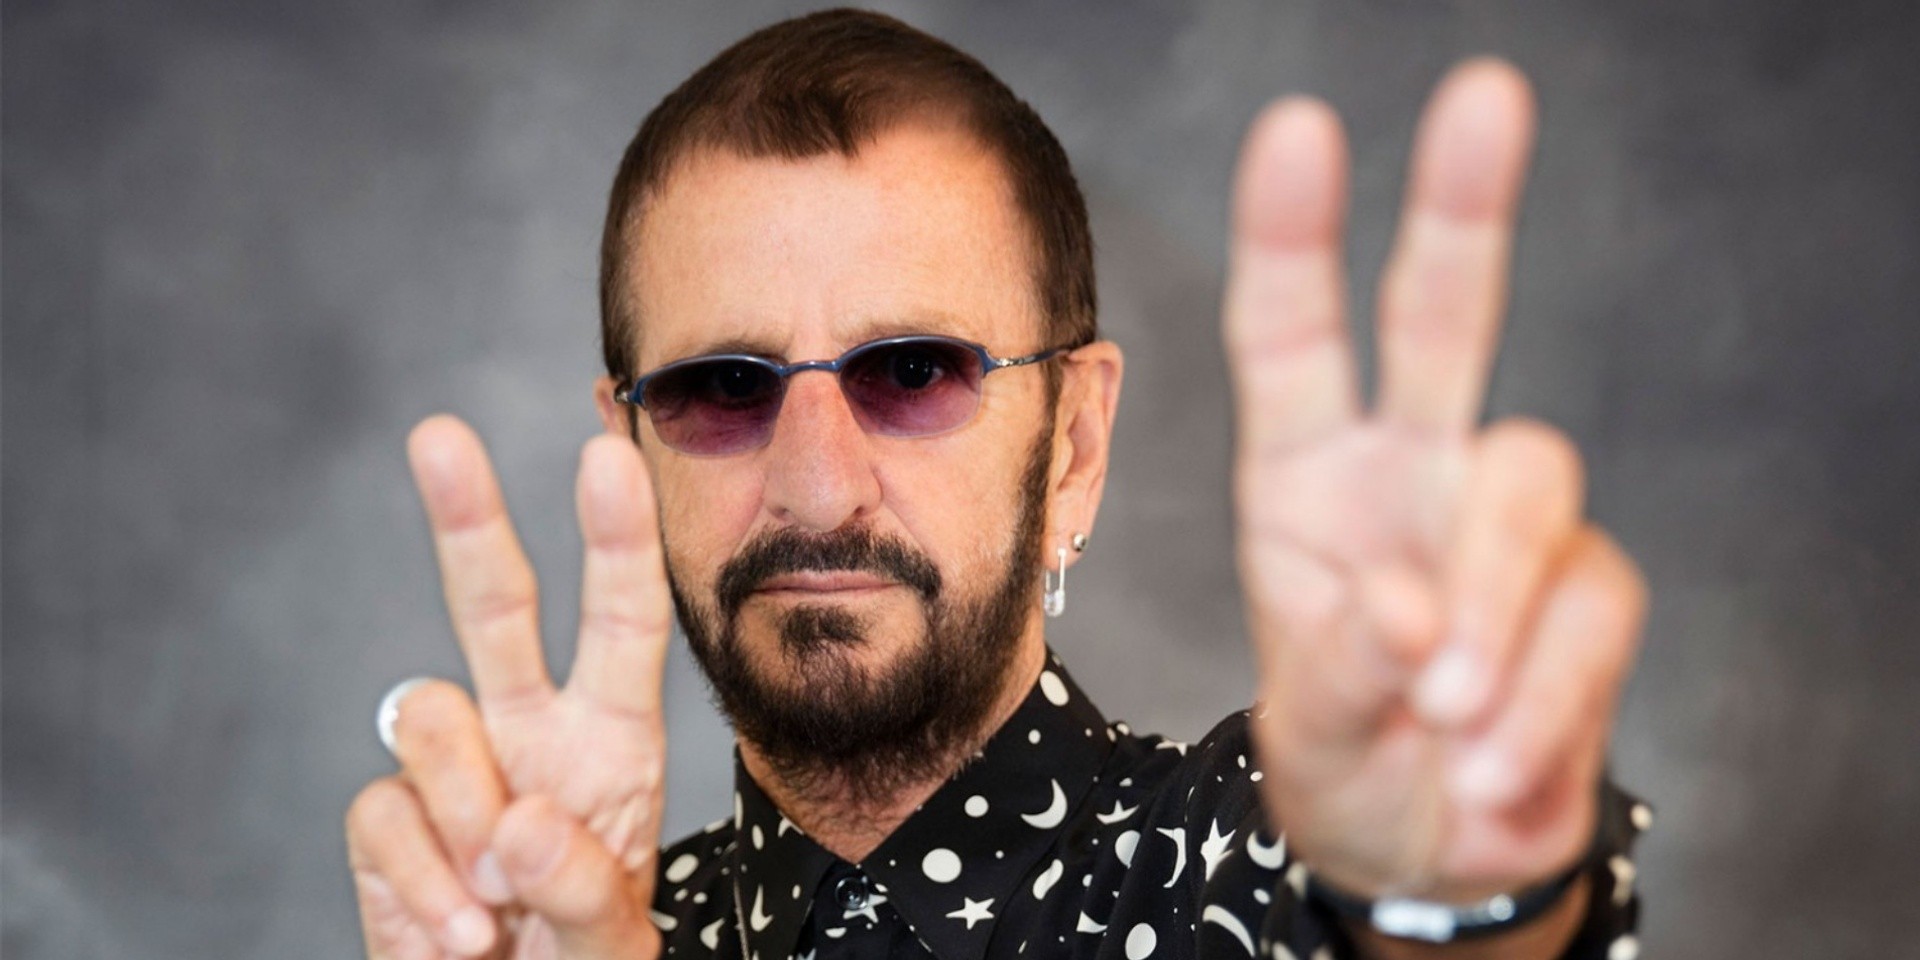 Ringo Starr reveals he's working on a new album